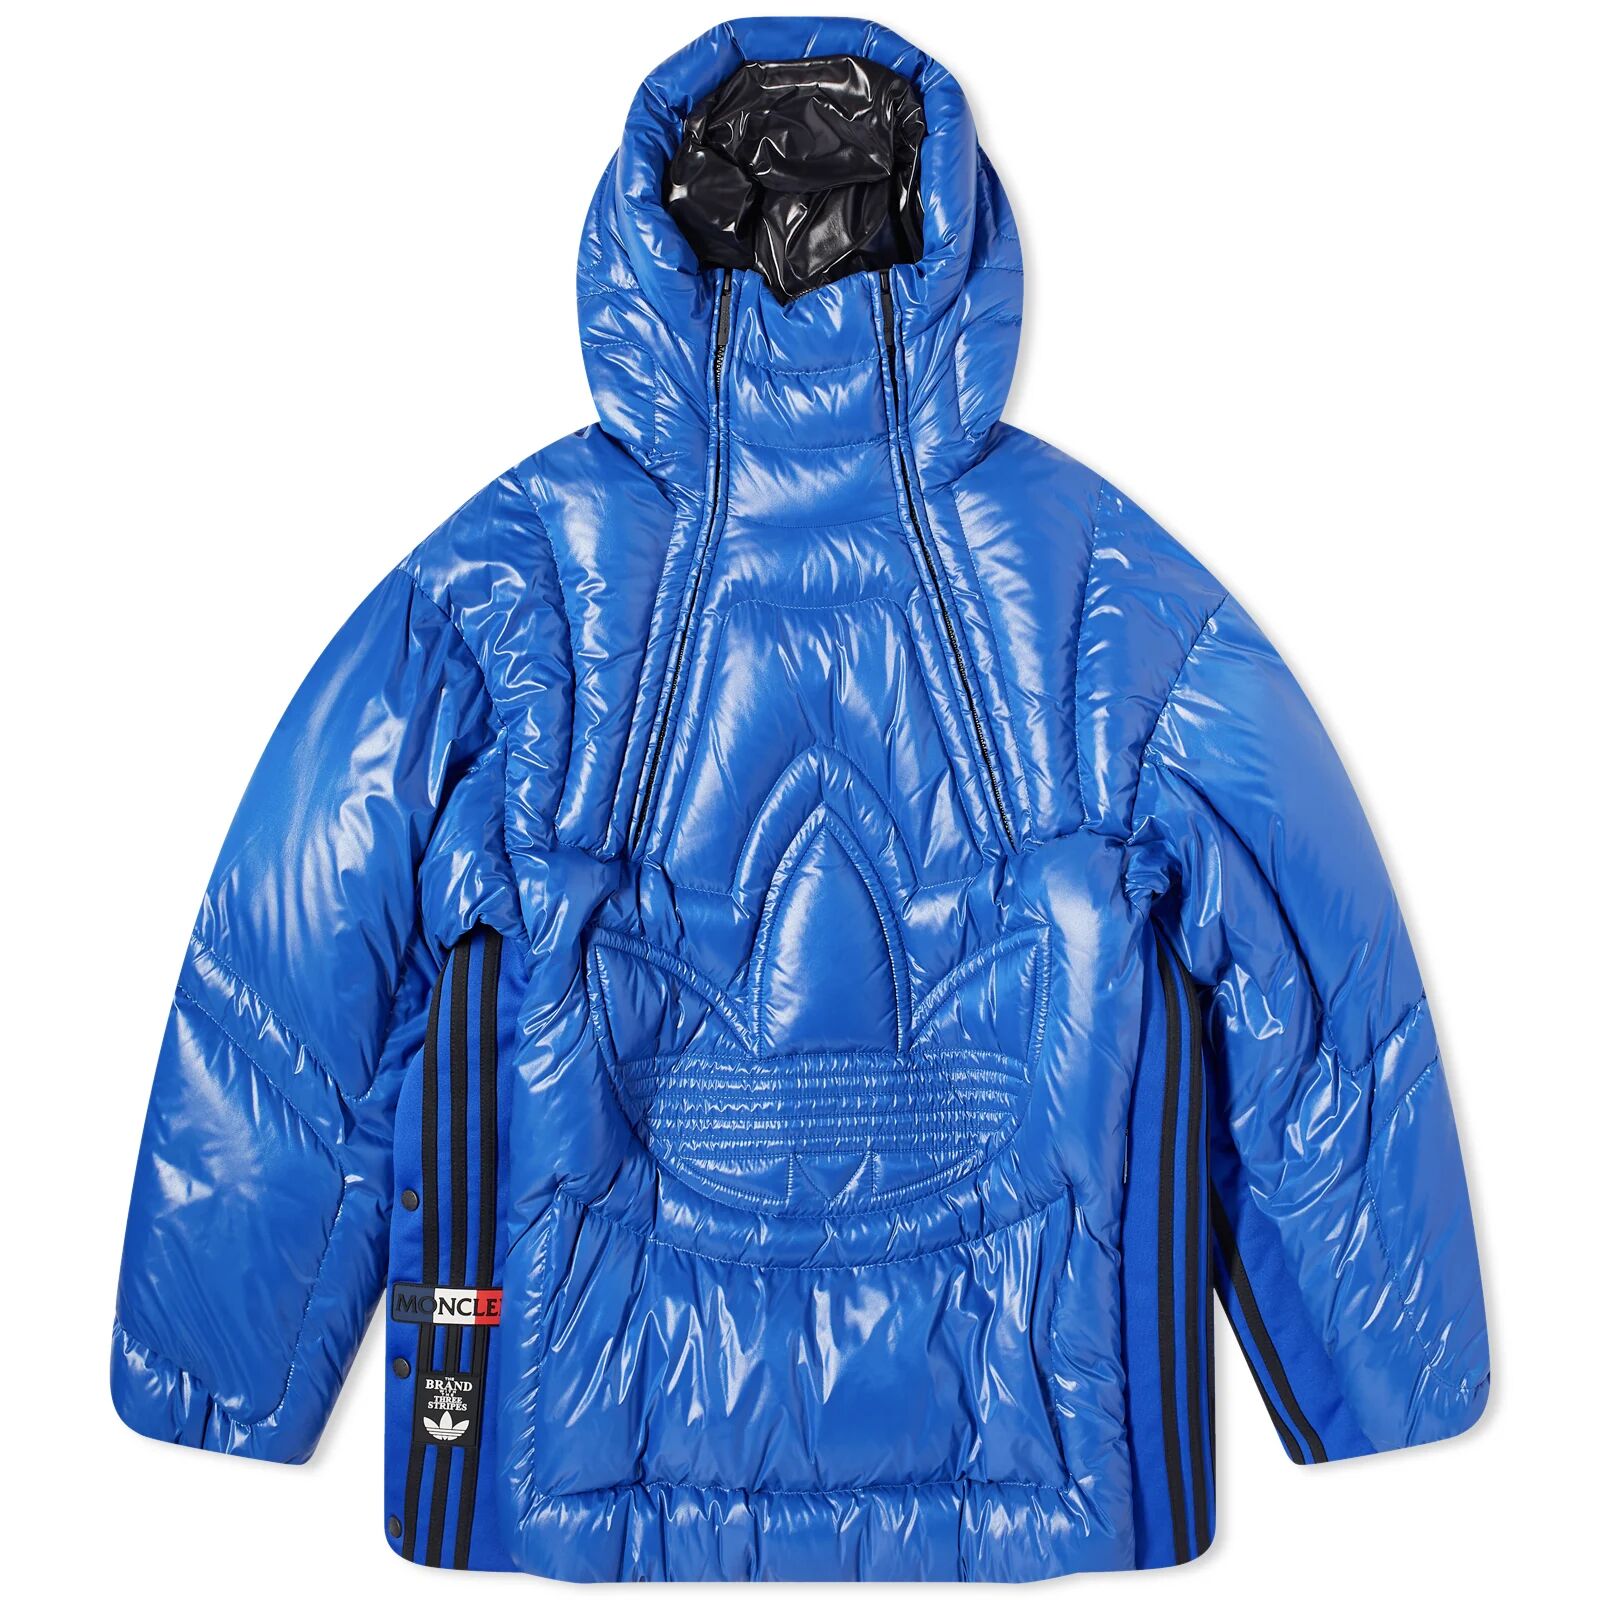 Moncler Men's x adidas Originals Chambery Trefoil Down Jacket in Blue, Size Medium